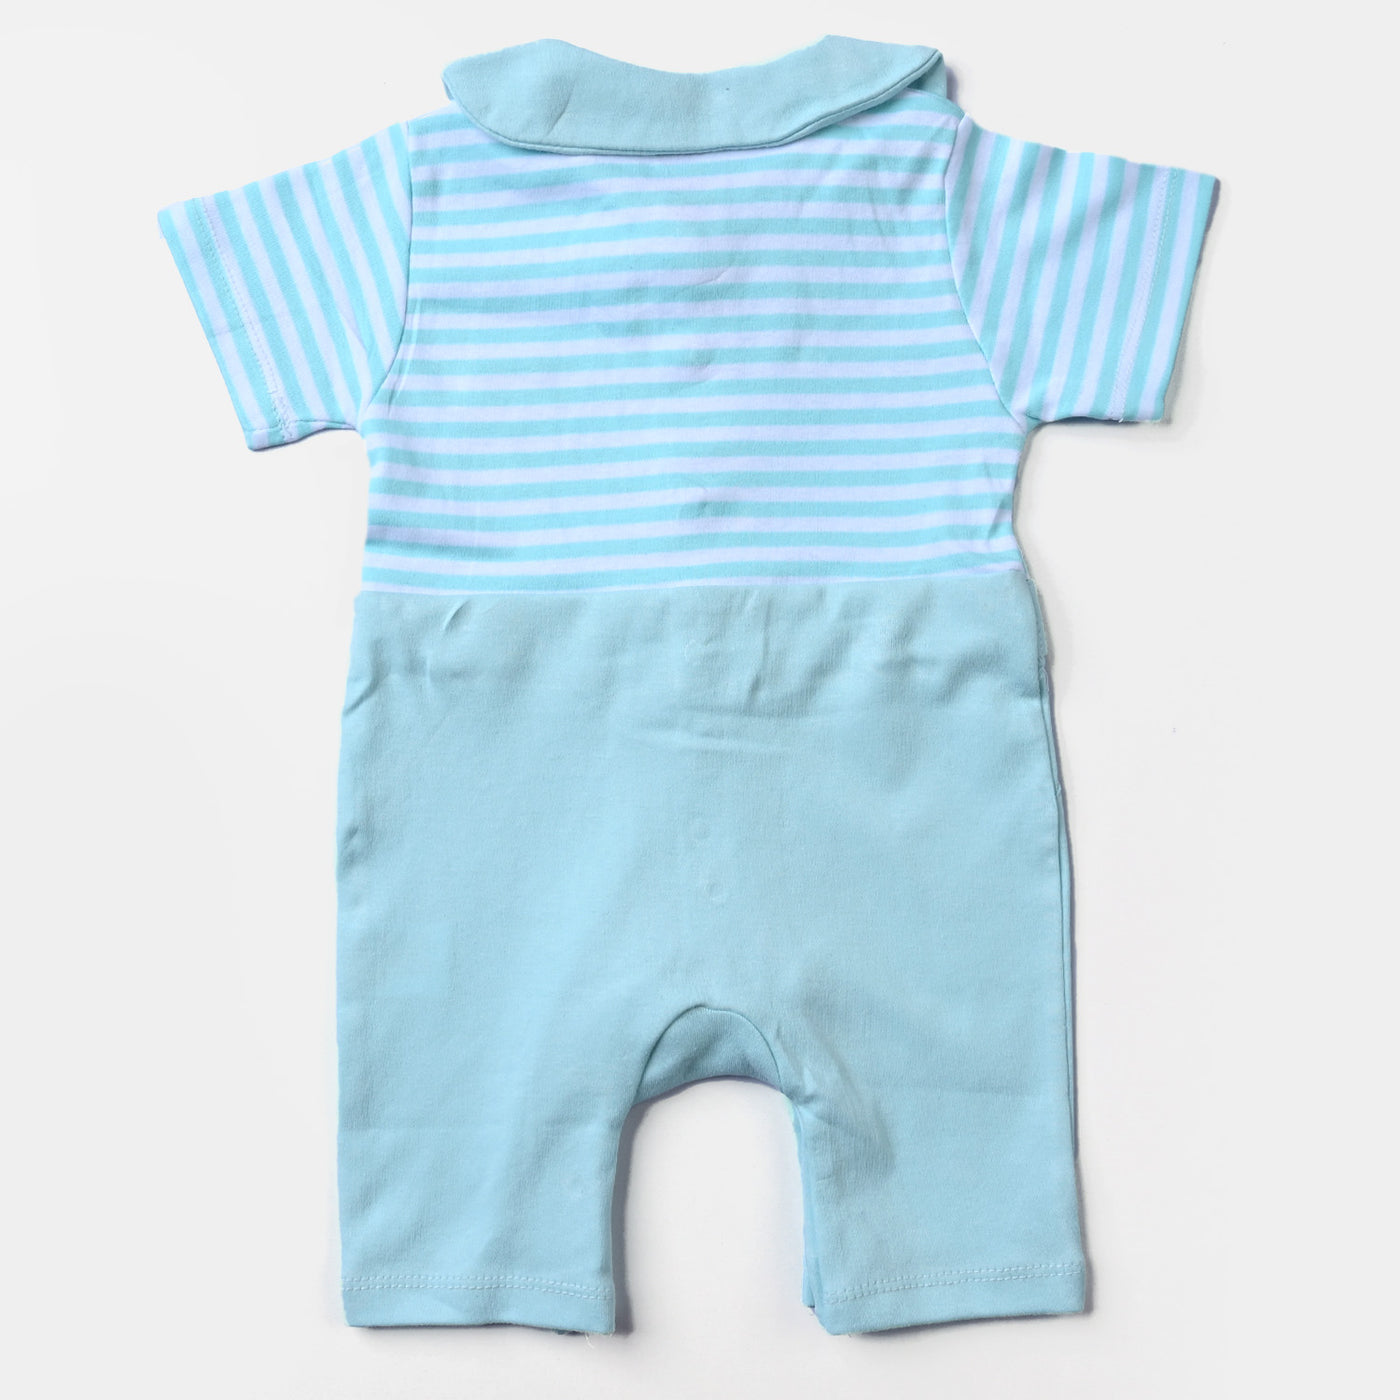 Infant Boys Cotton Interlock Knitted Romper-Yarn Dyed